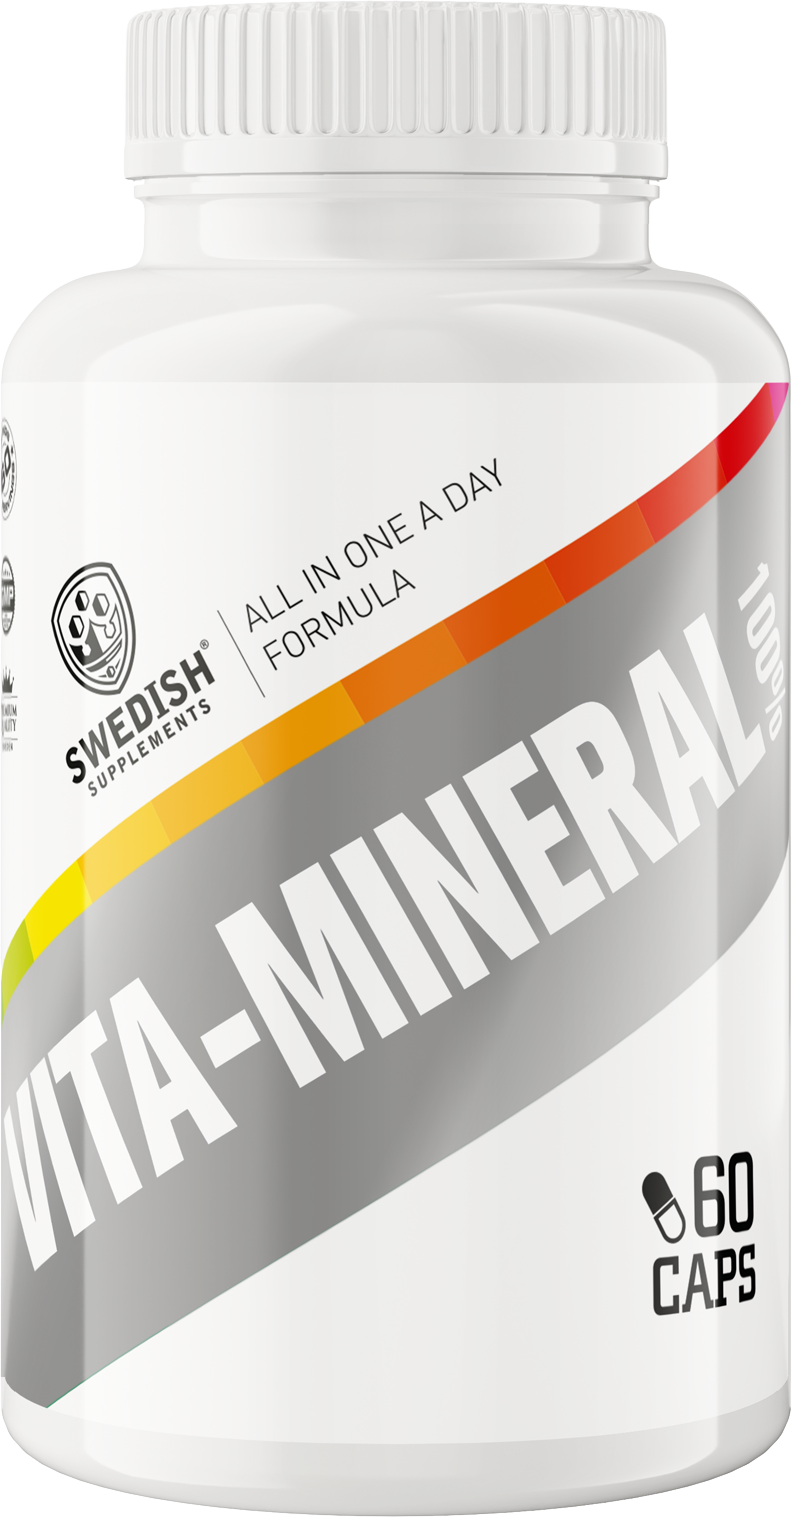 100% Vita Mineral / All in One a Day Formula - BadiZdrav.BG